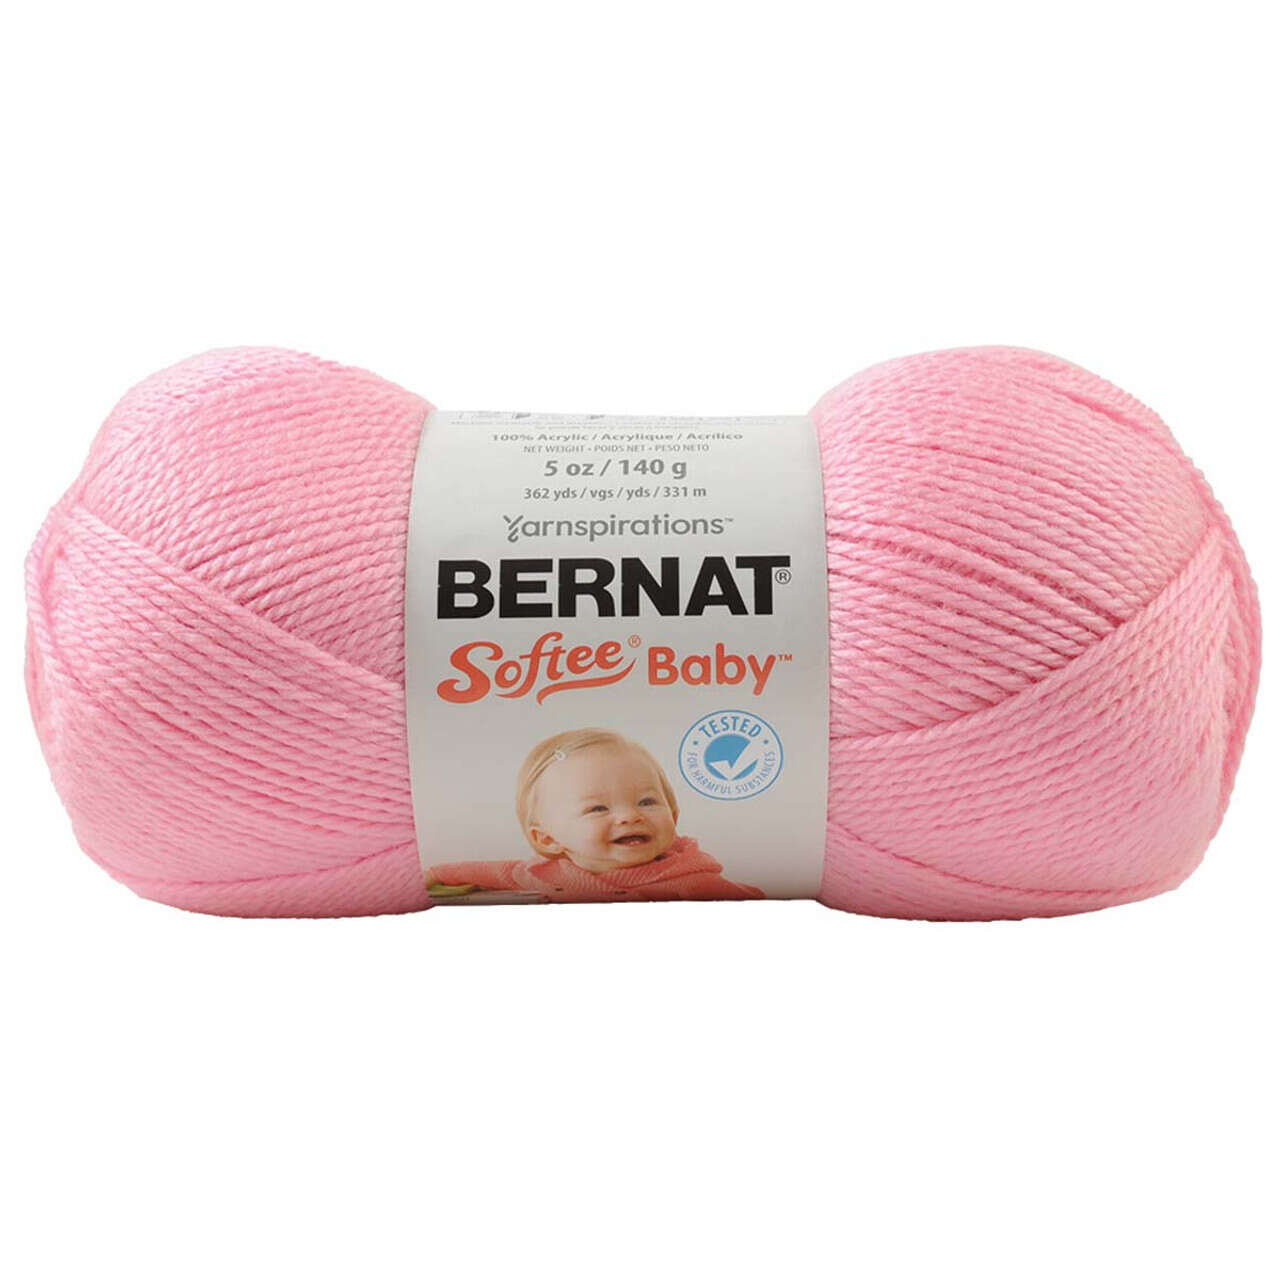 Bernat Softee Baby Yarn - Solids-Baby Denim Marl, 1 count - Kroger